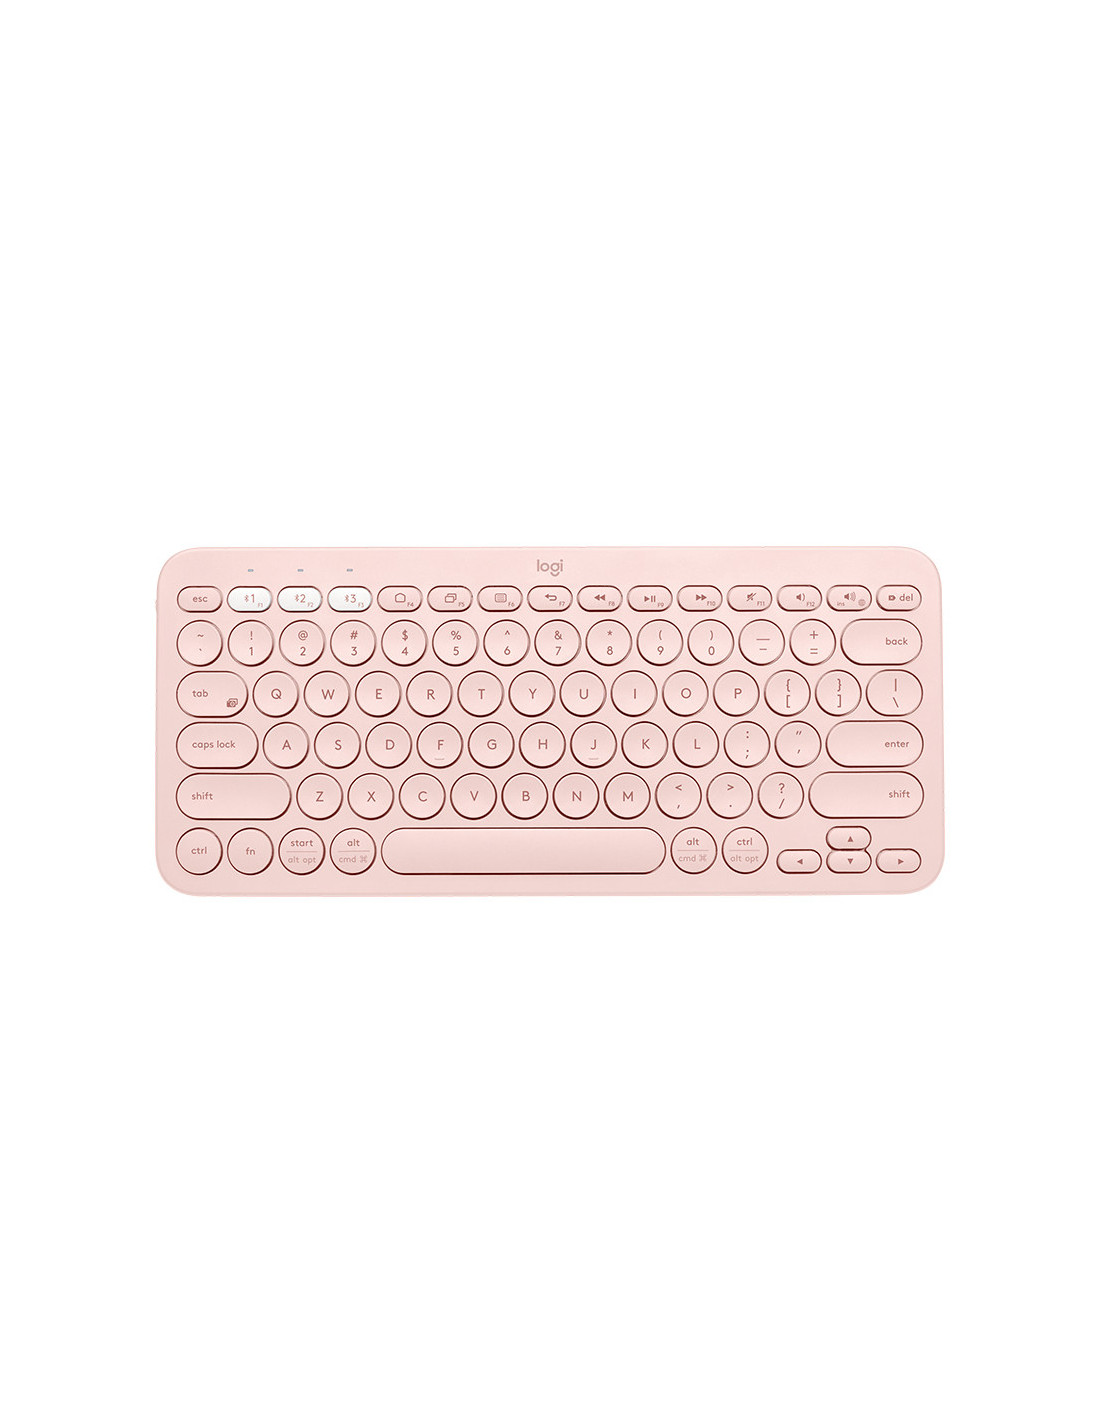 Logitech Wireless Keyboard K380 - Pink (Englisch)